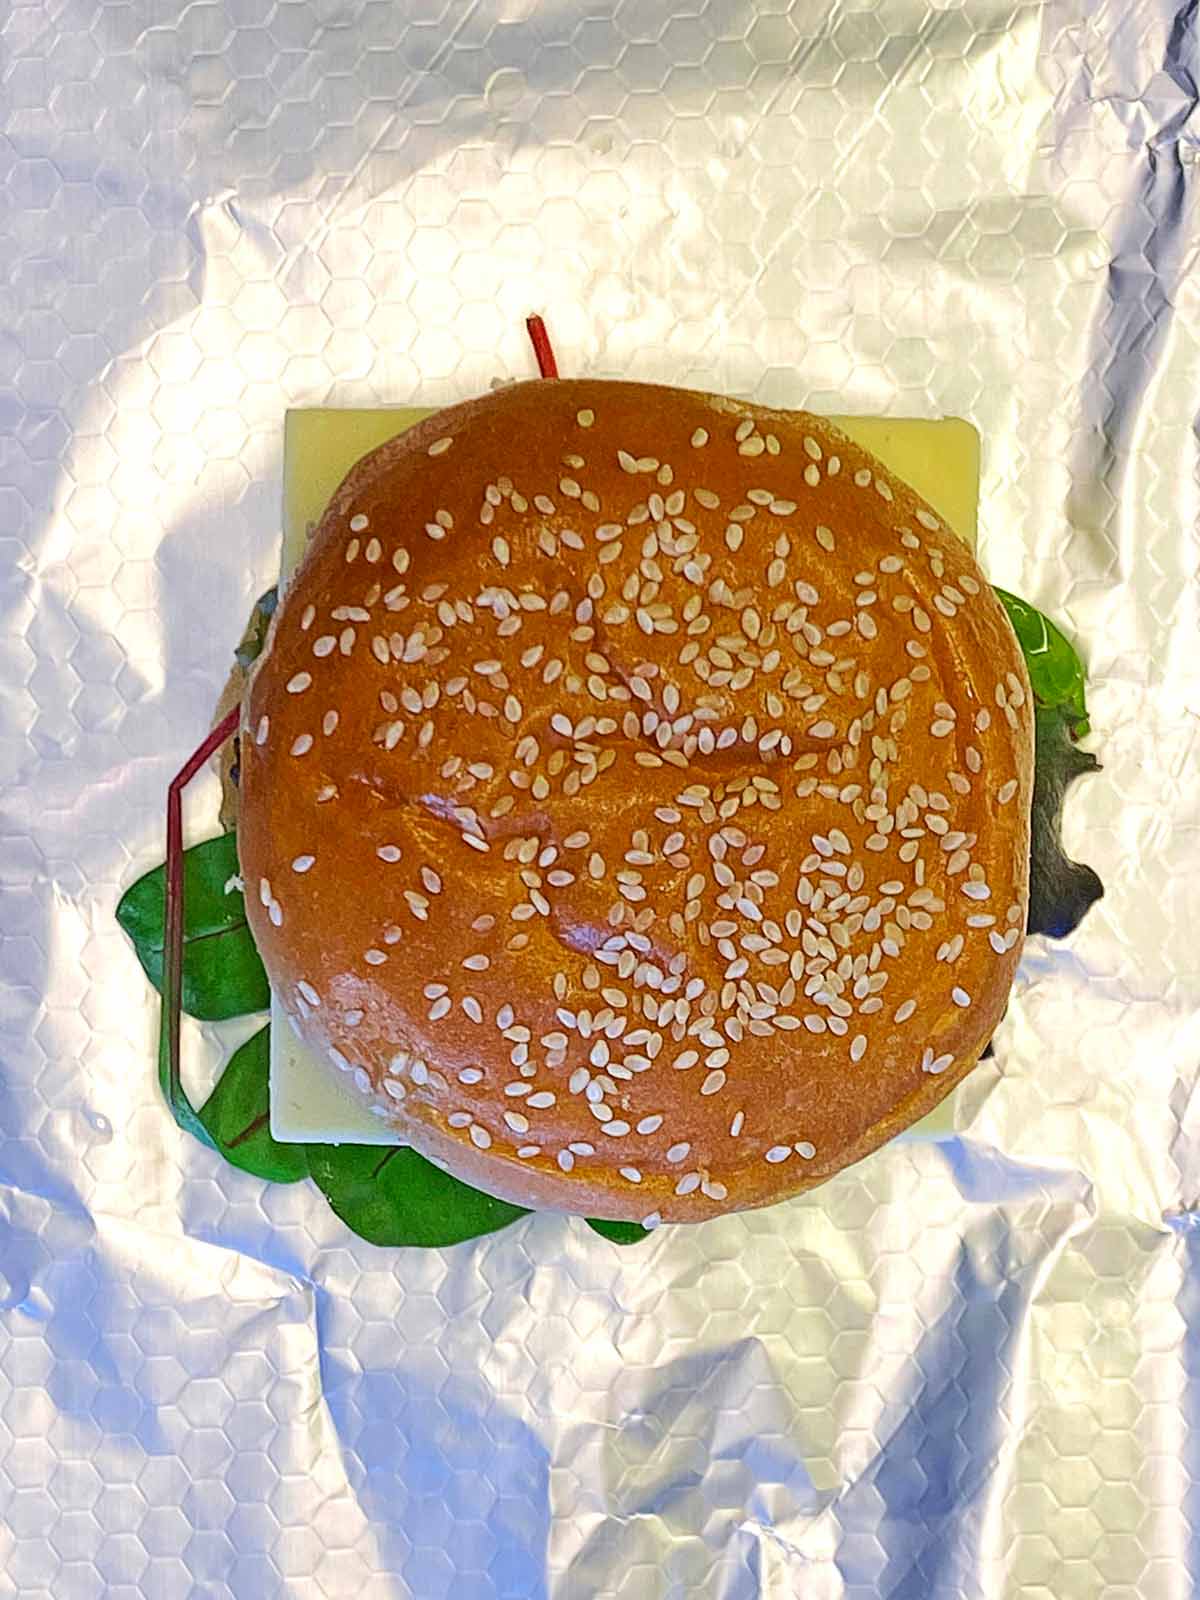 A hamburger sat on some foil.